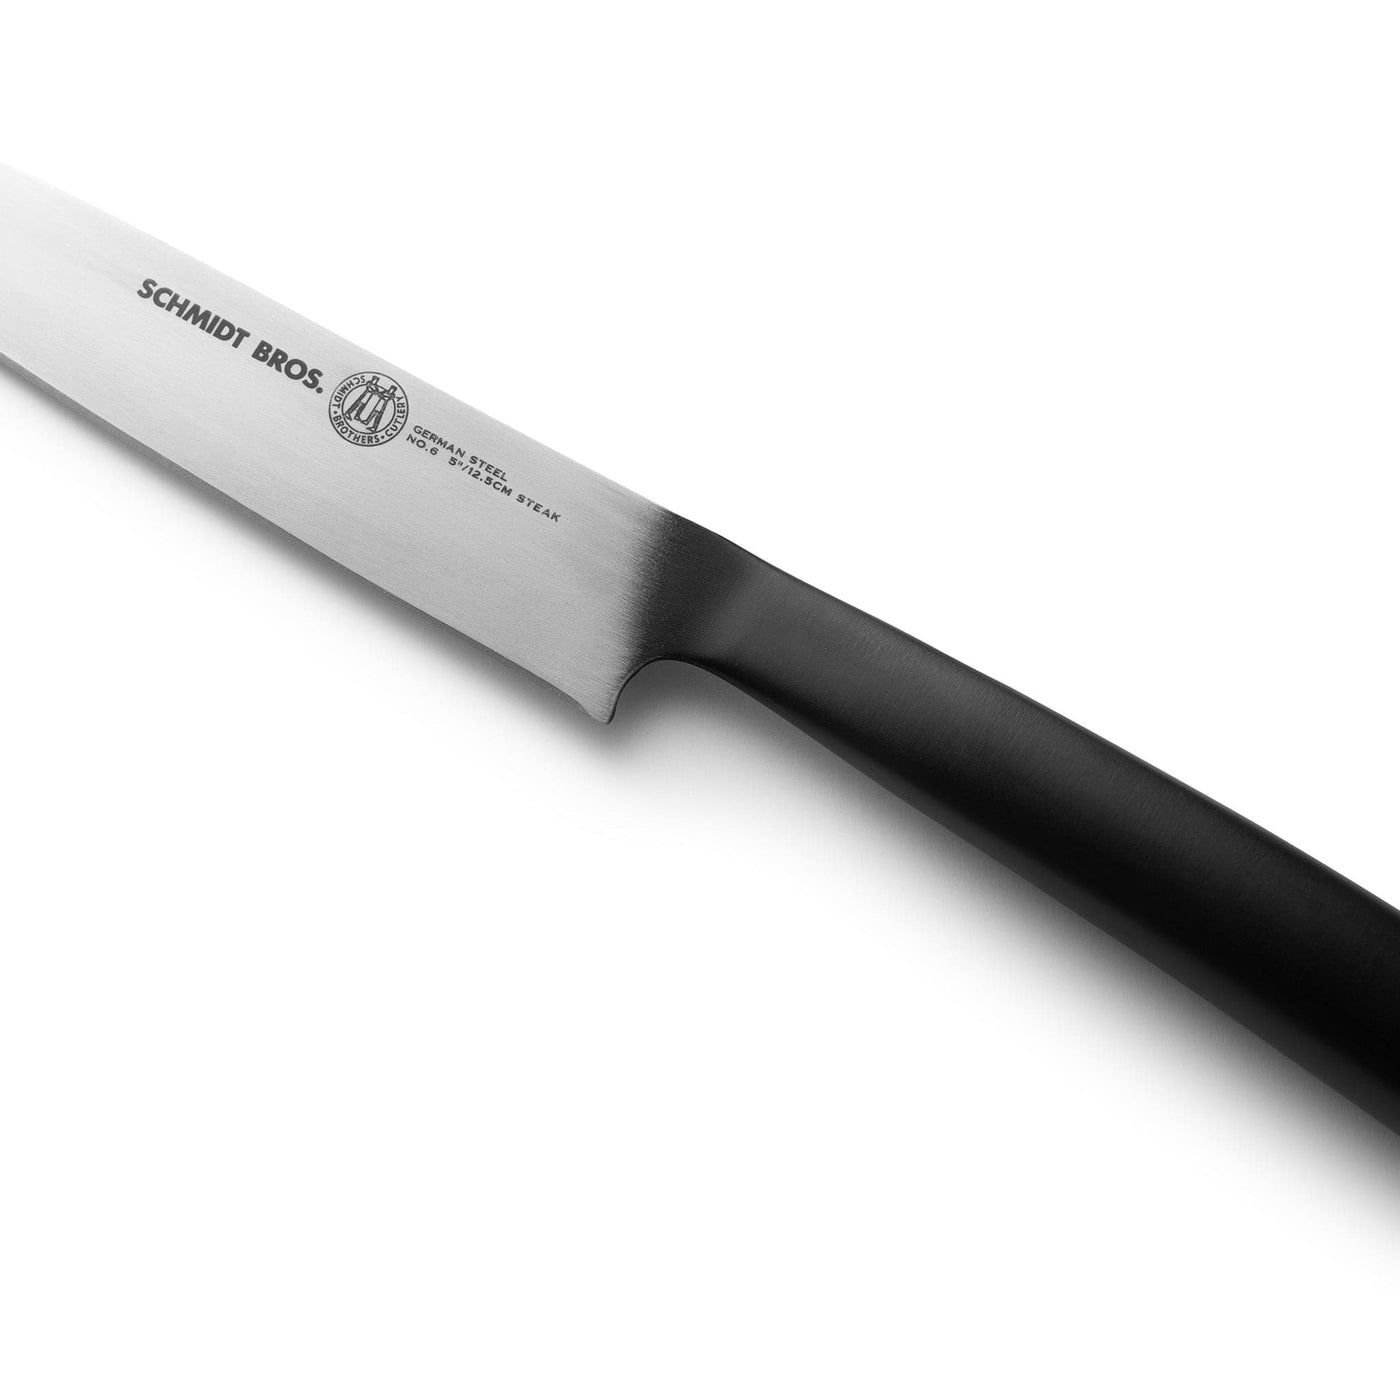 Barenthal 6 Piece Stainless Steel Steak Knife Set & Reviews